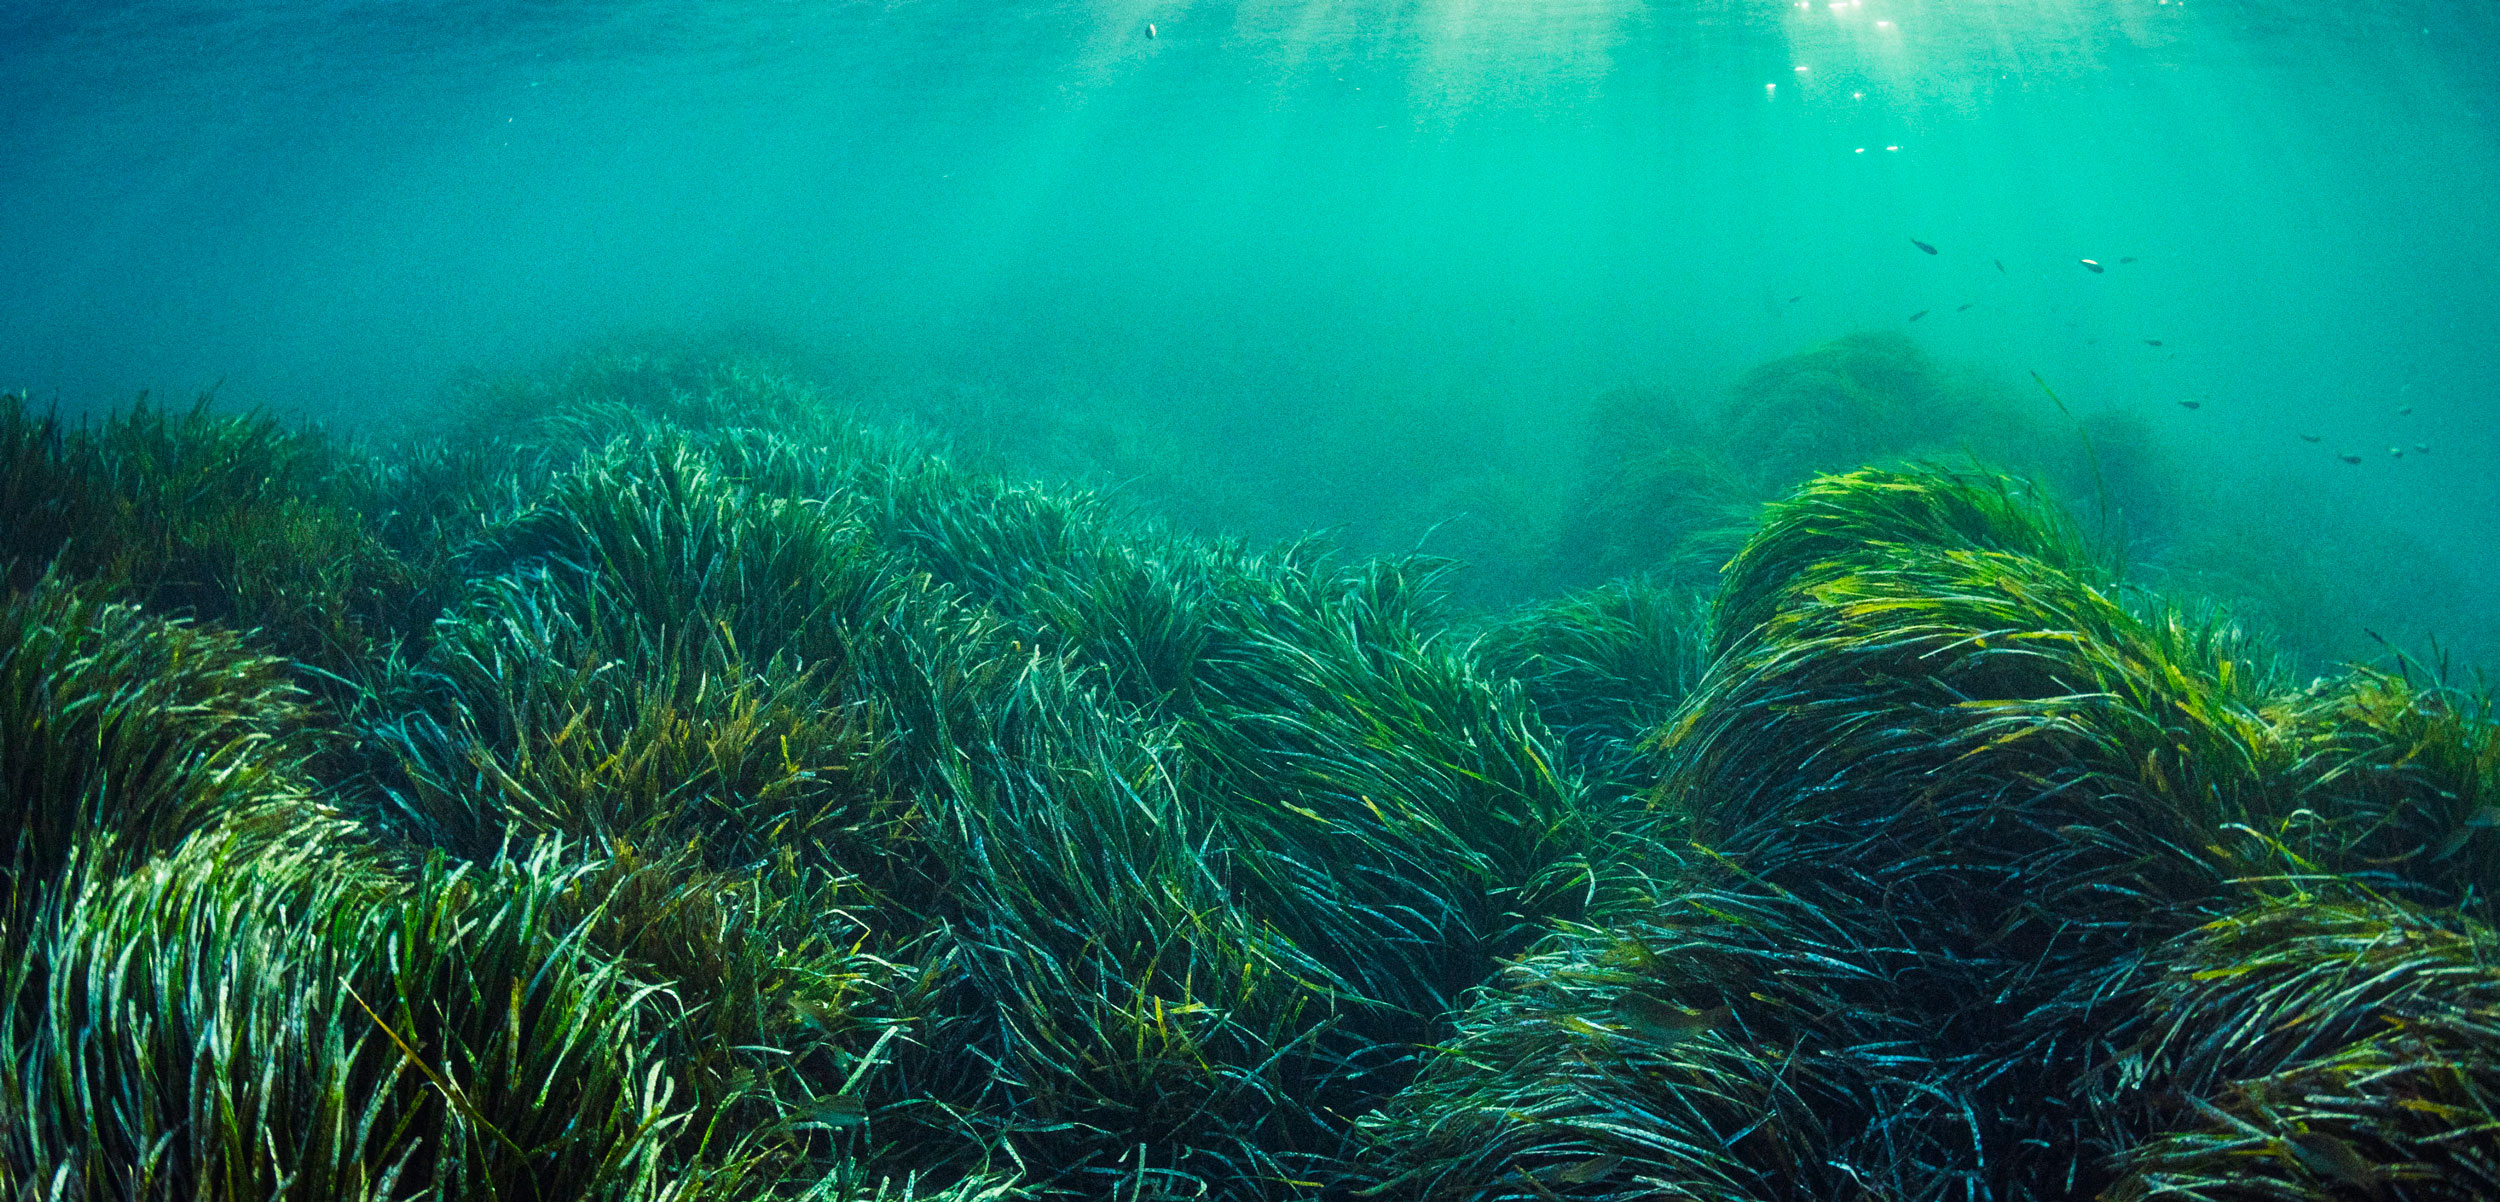 Neptune seagrass (Posidonia oceanica) bed